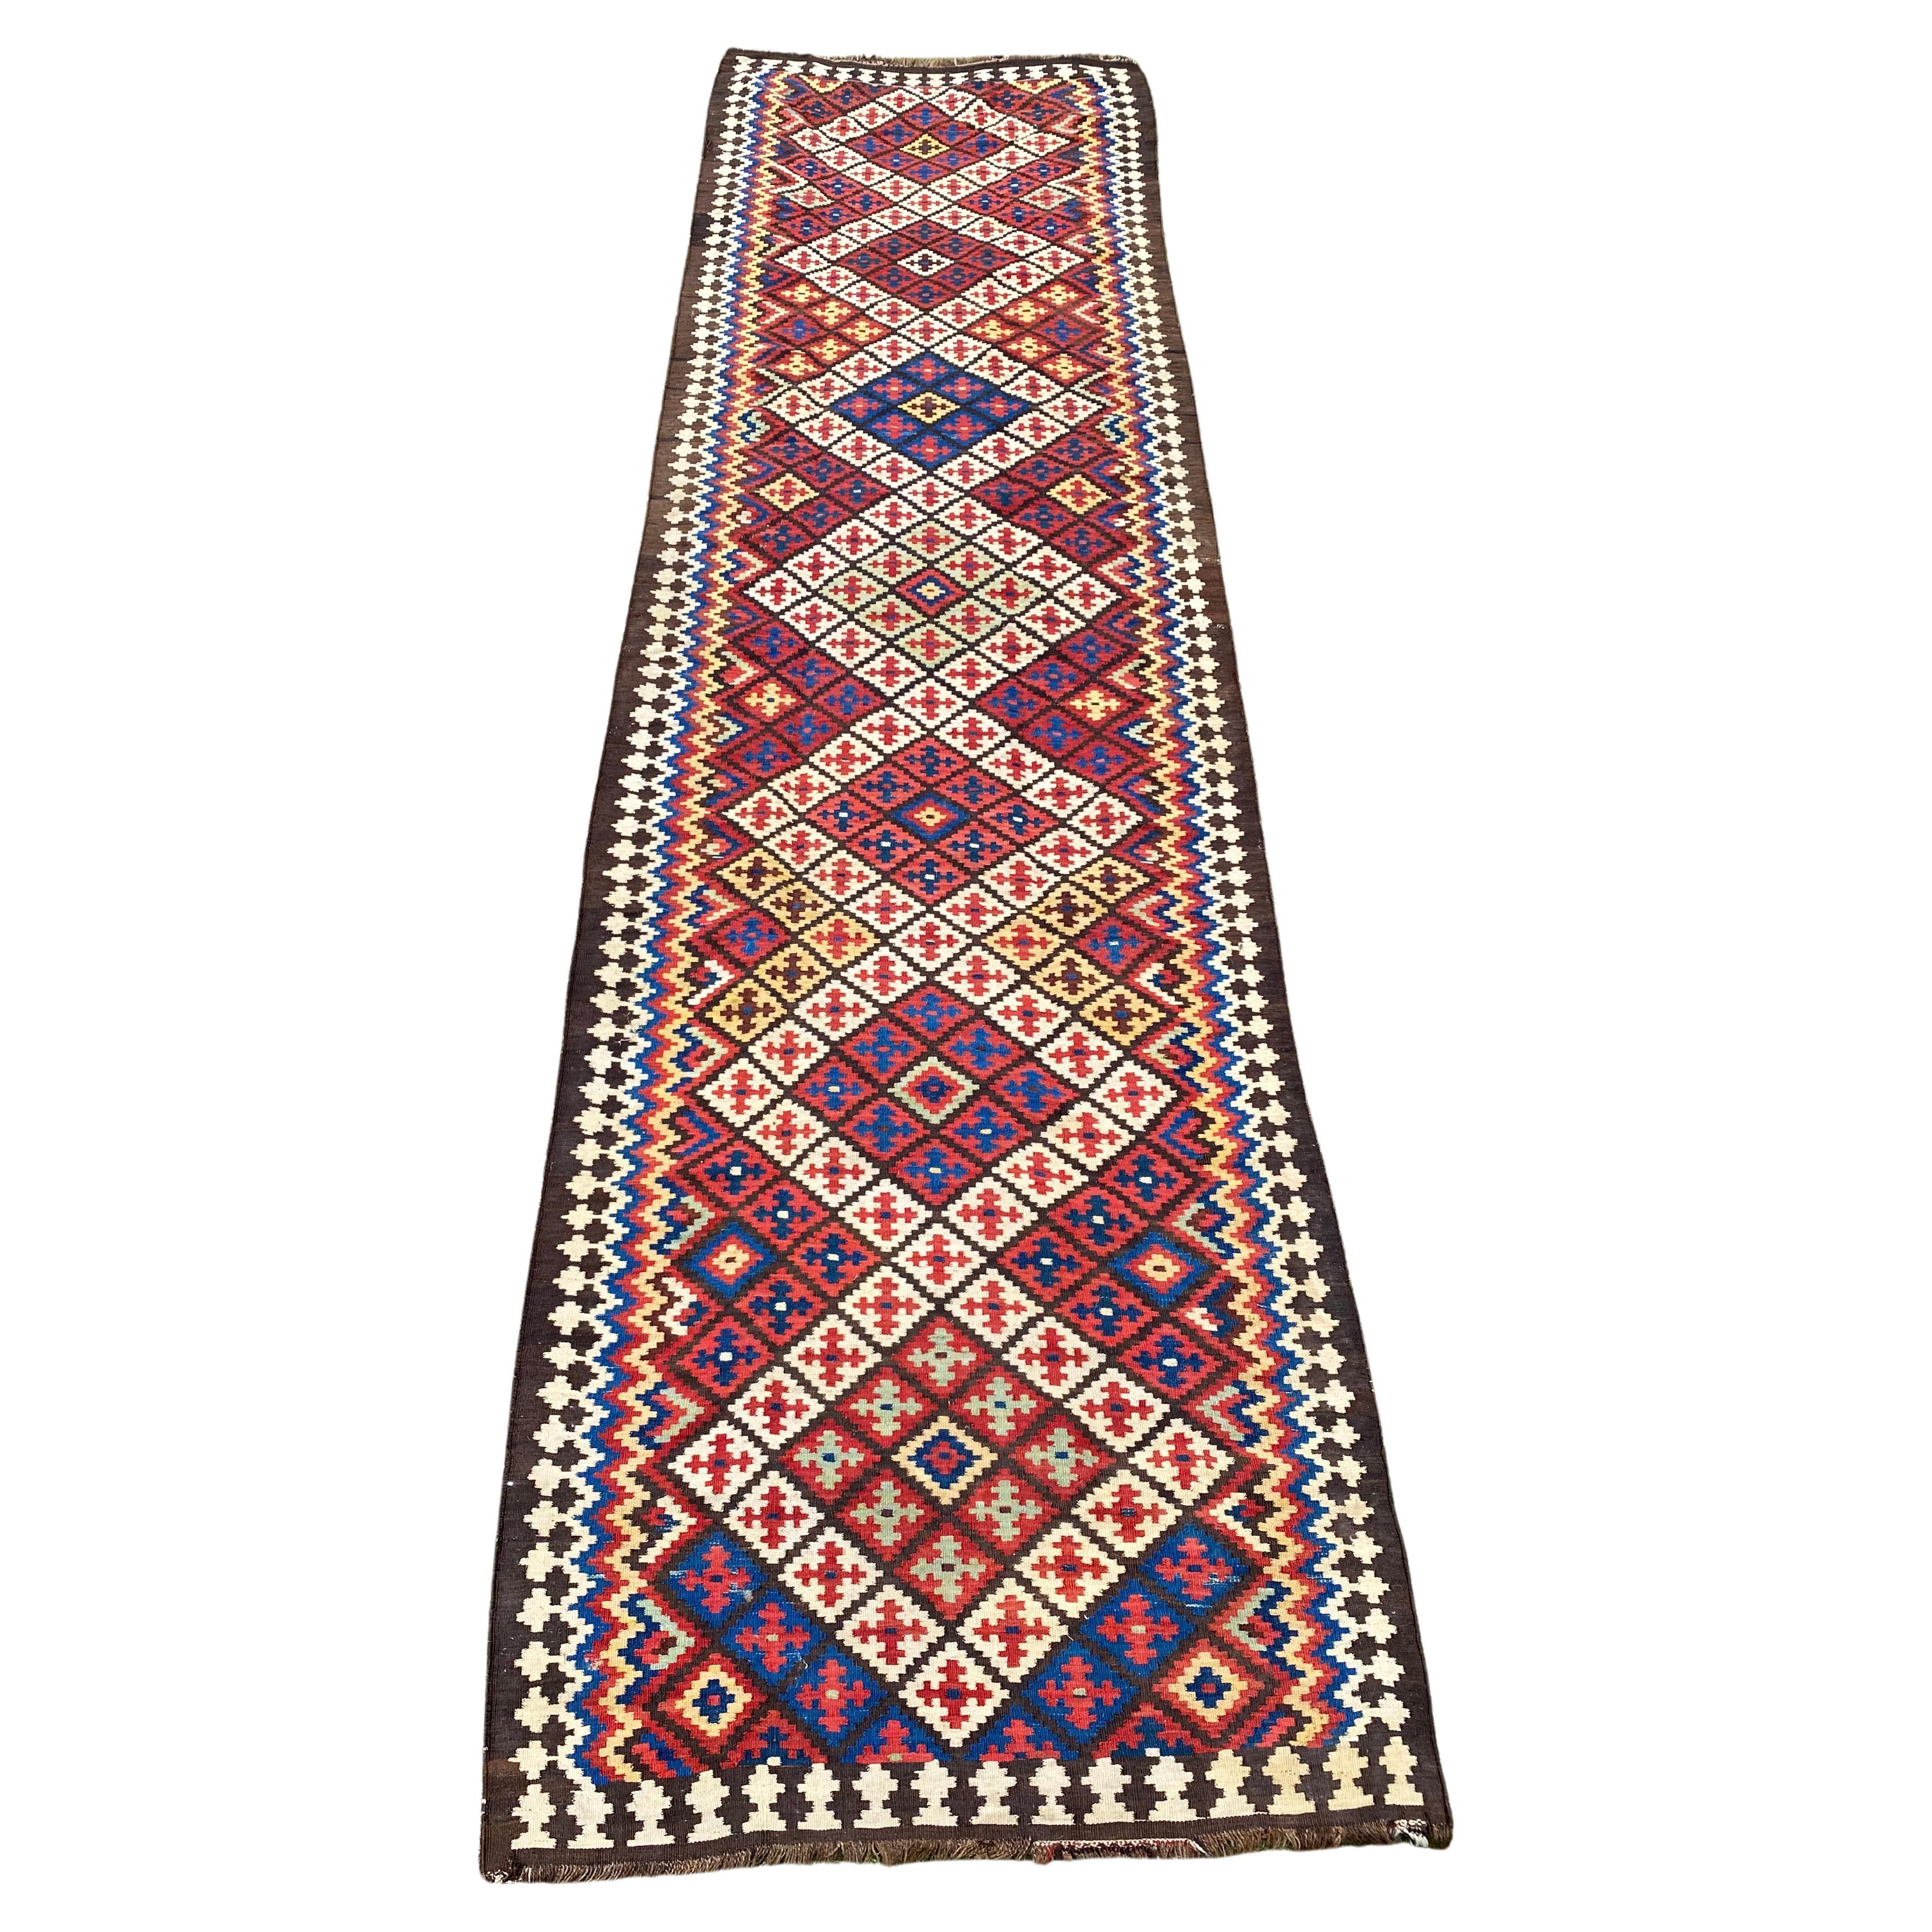 Uzbekistan Tartari Ranghi Kilim Rug from Wool, Early 20th Century For Sale